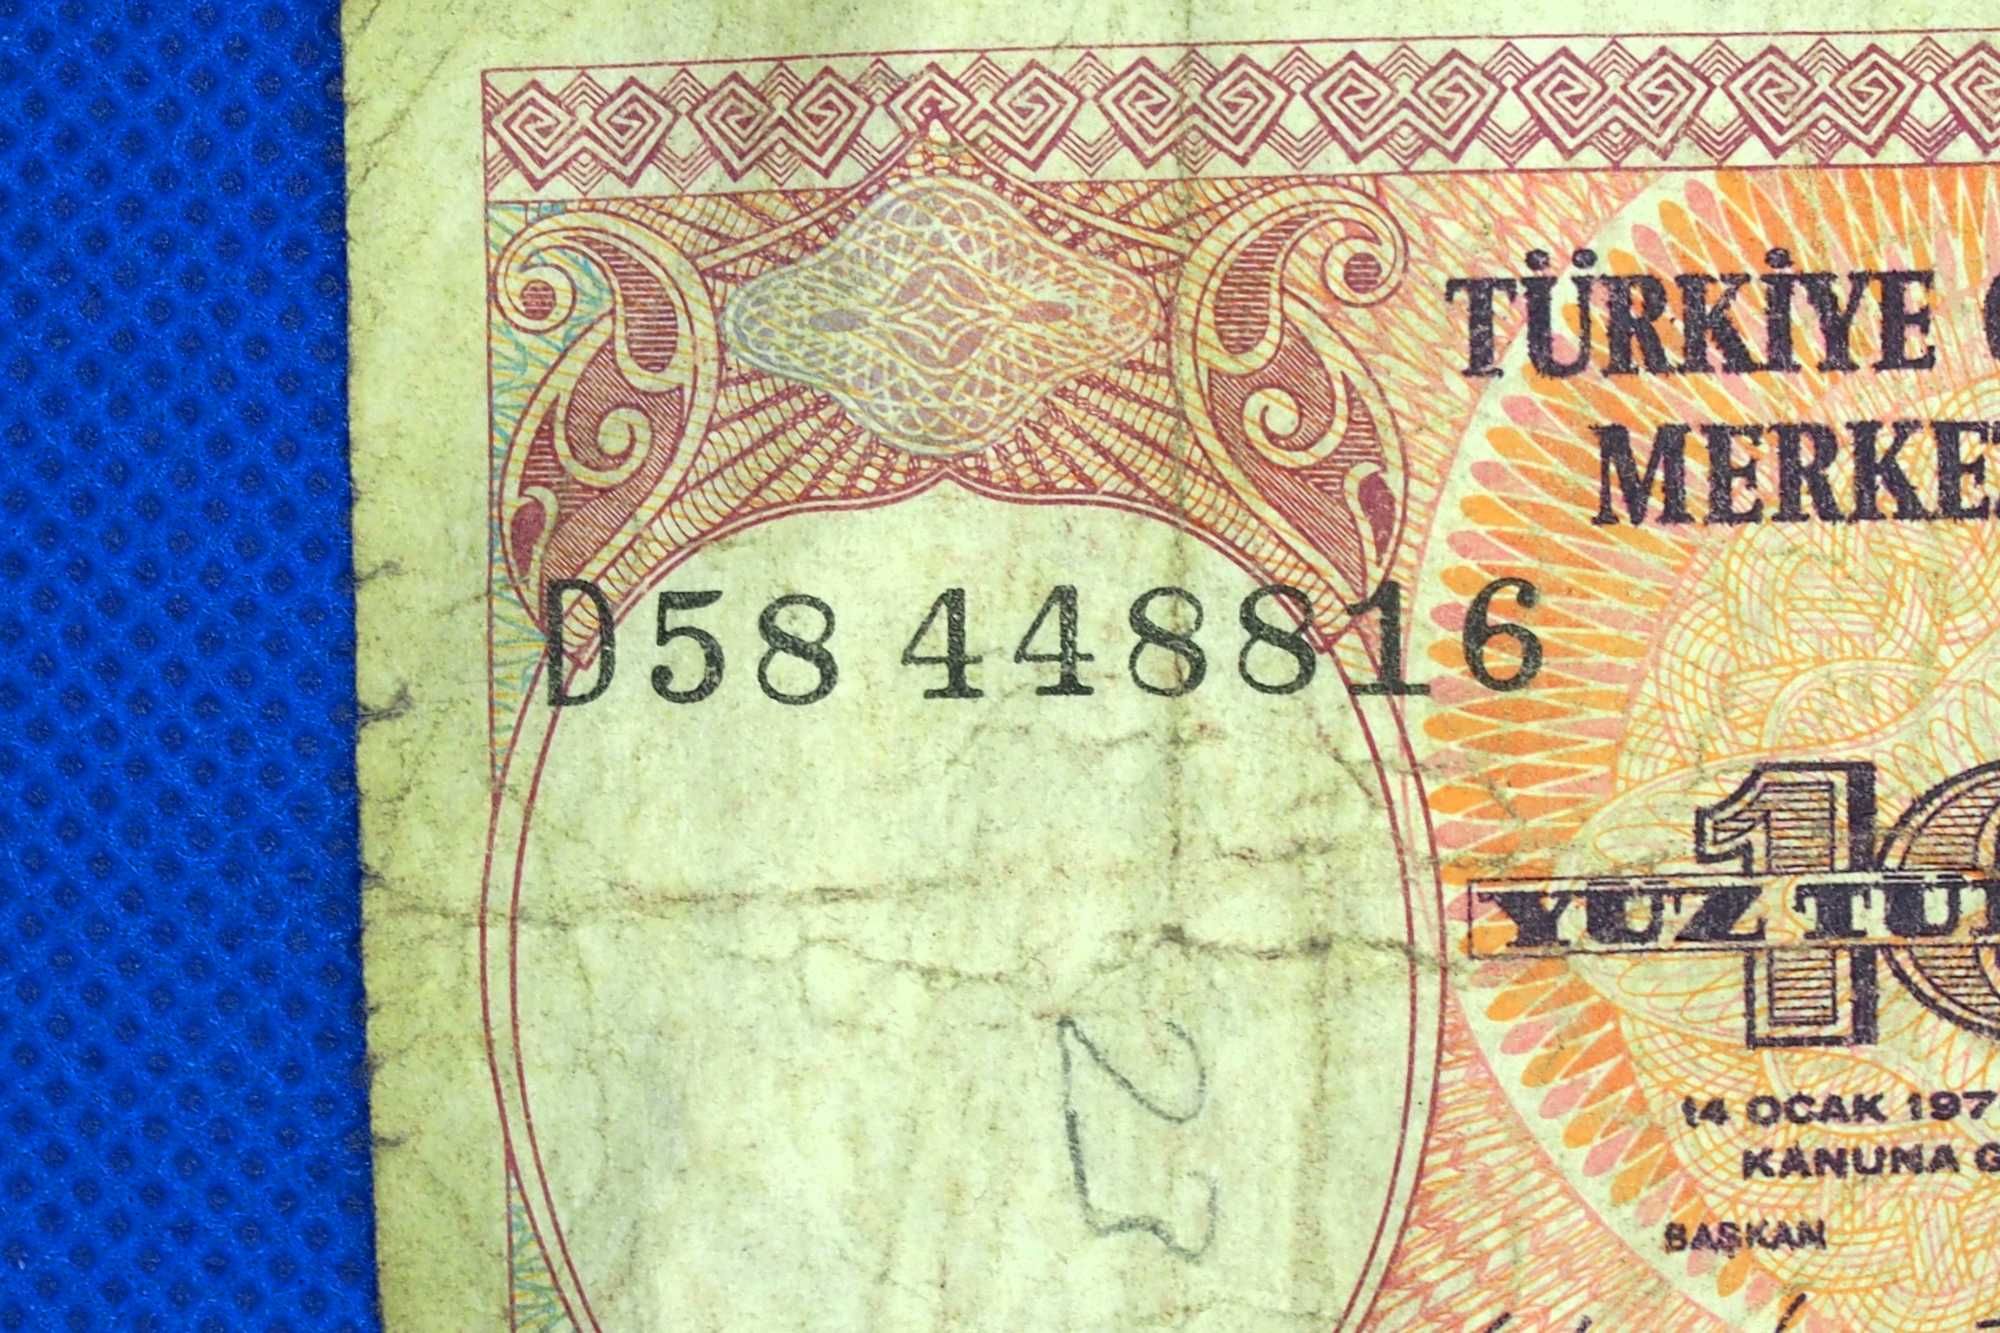 BANKNOT 100 lir sto lirów tureckich TURCJA 1970 archiwal numizmat 8816